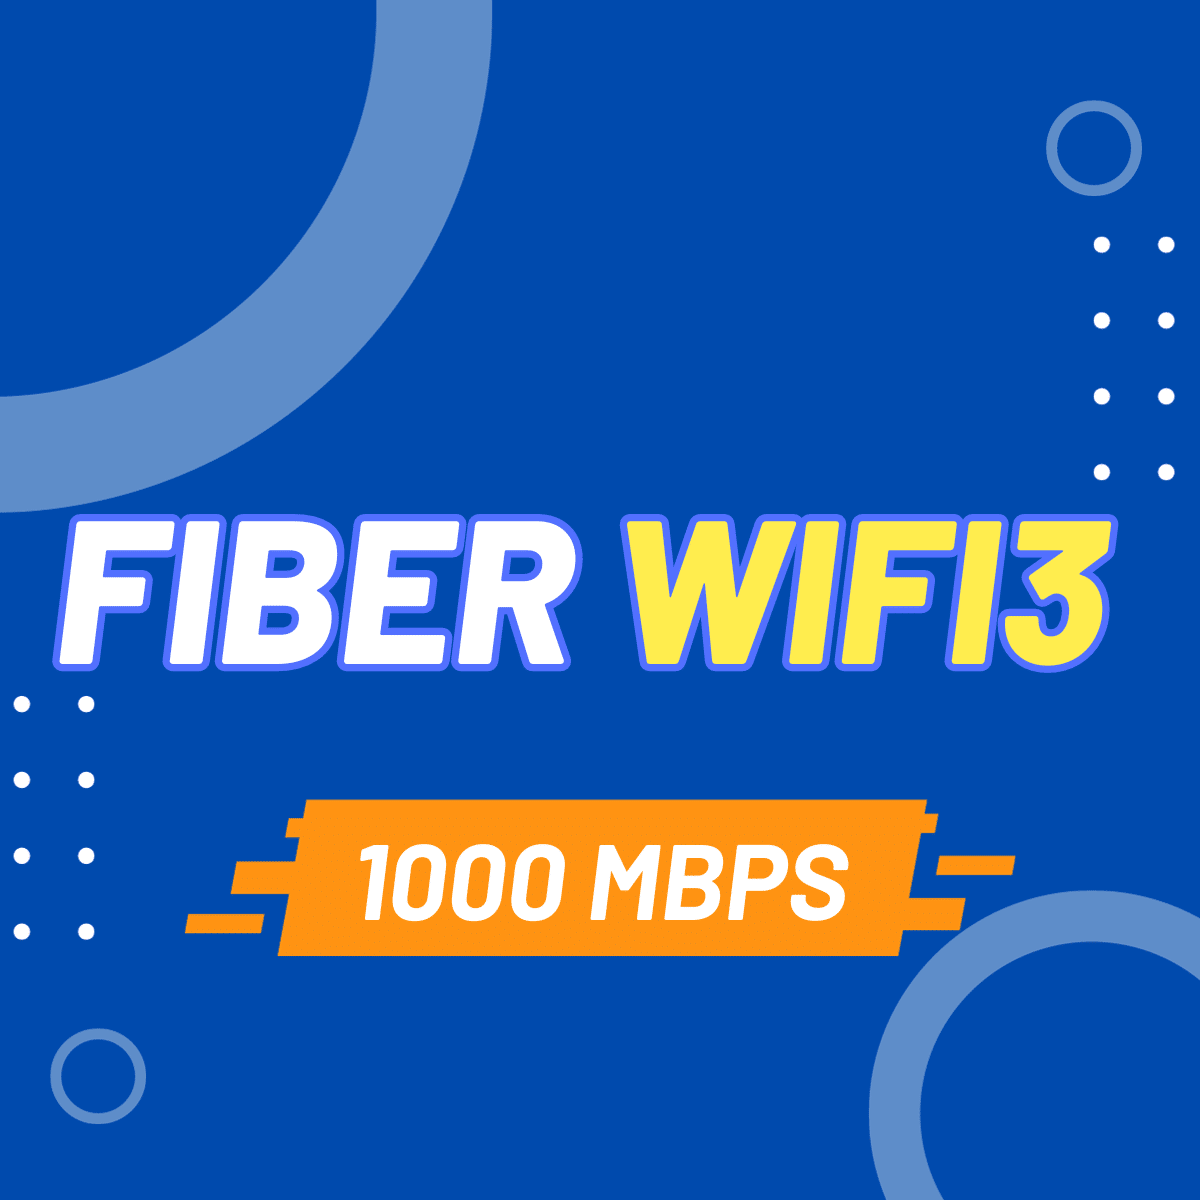 Fiber Wifi3, fiberwifi3